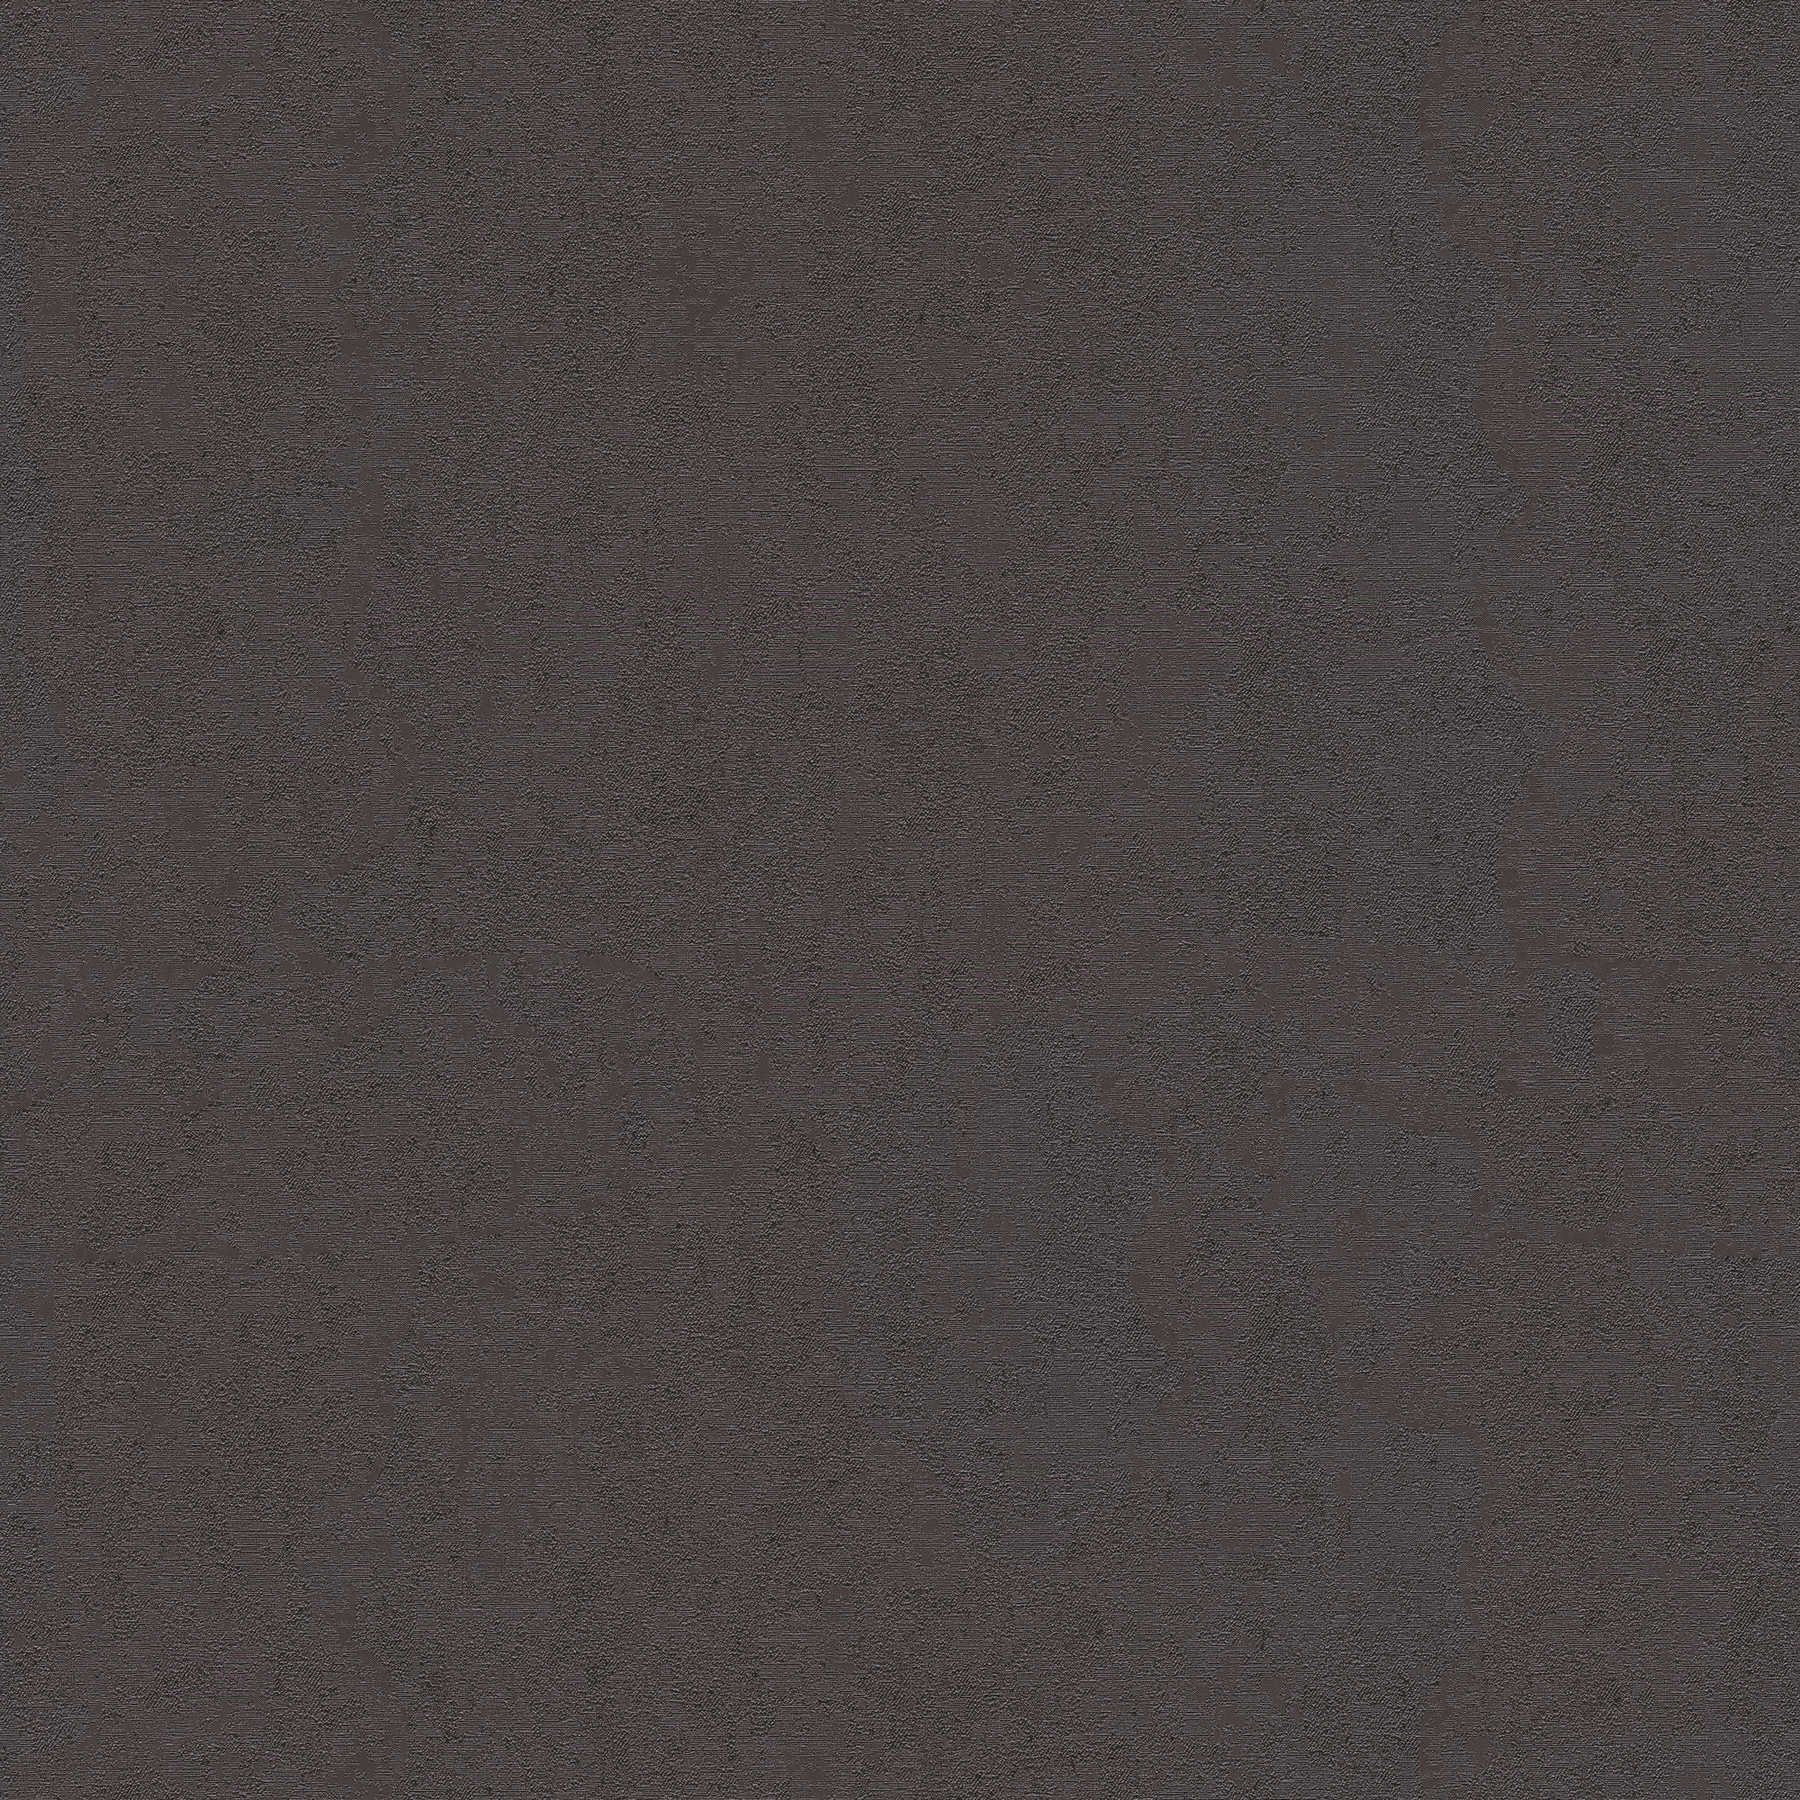 VERSACE Home Plaint Wallpaper Black with Shimmer - Black
